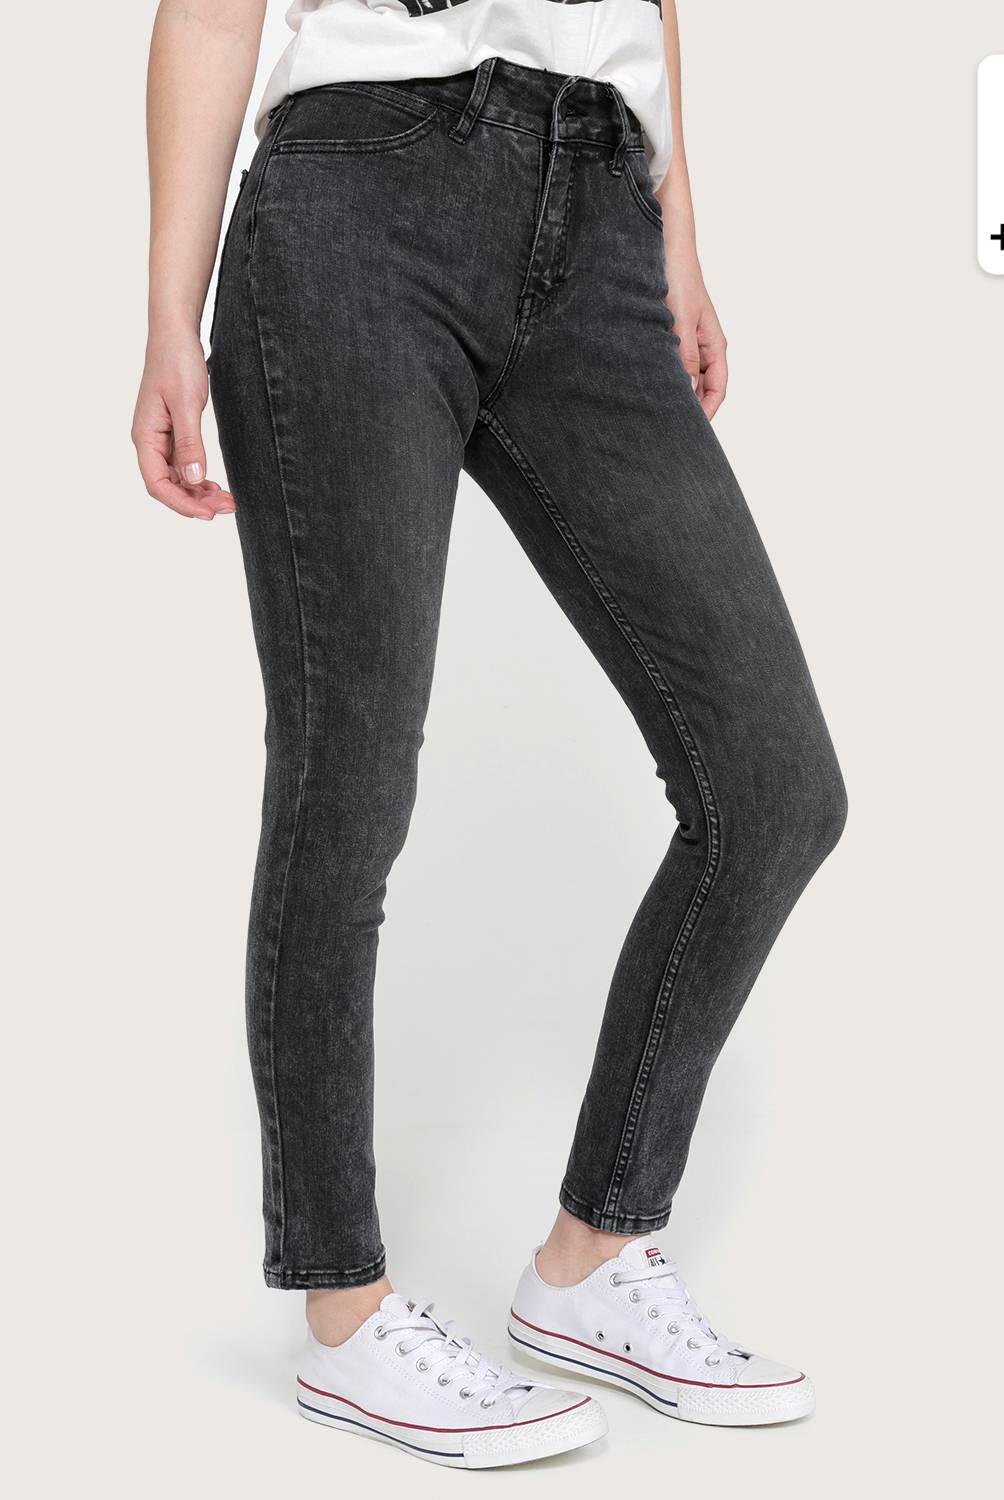 AMERICANINO - Jeans Skinny Tiro Alto Mujer